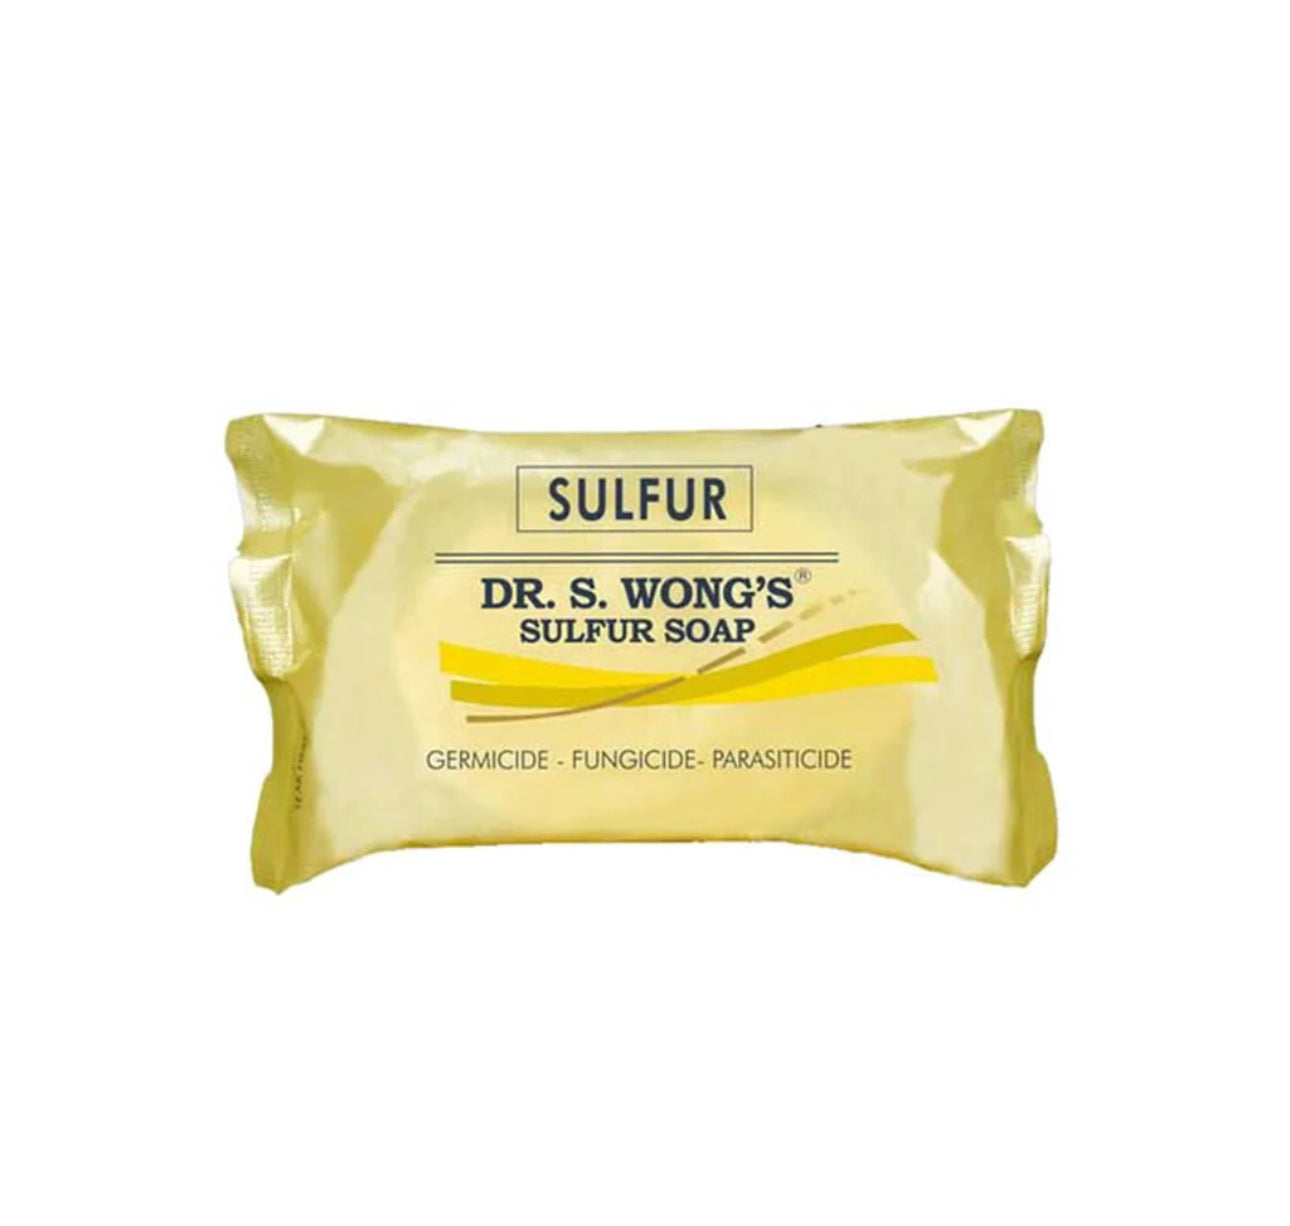 Dr. S. Wong’s Sulfur Soap Regular